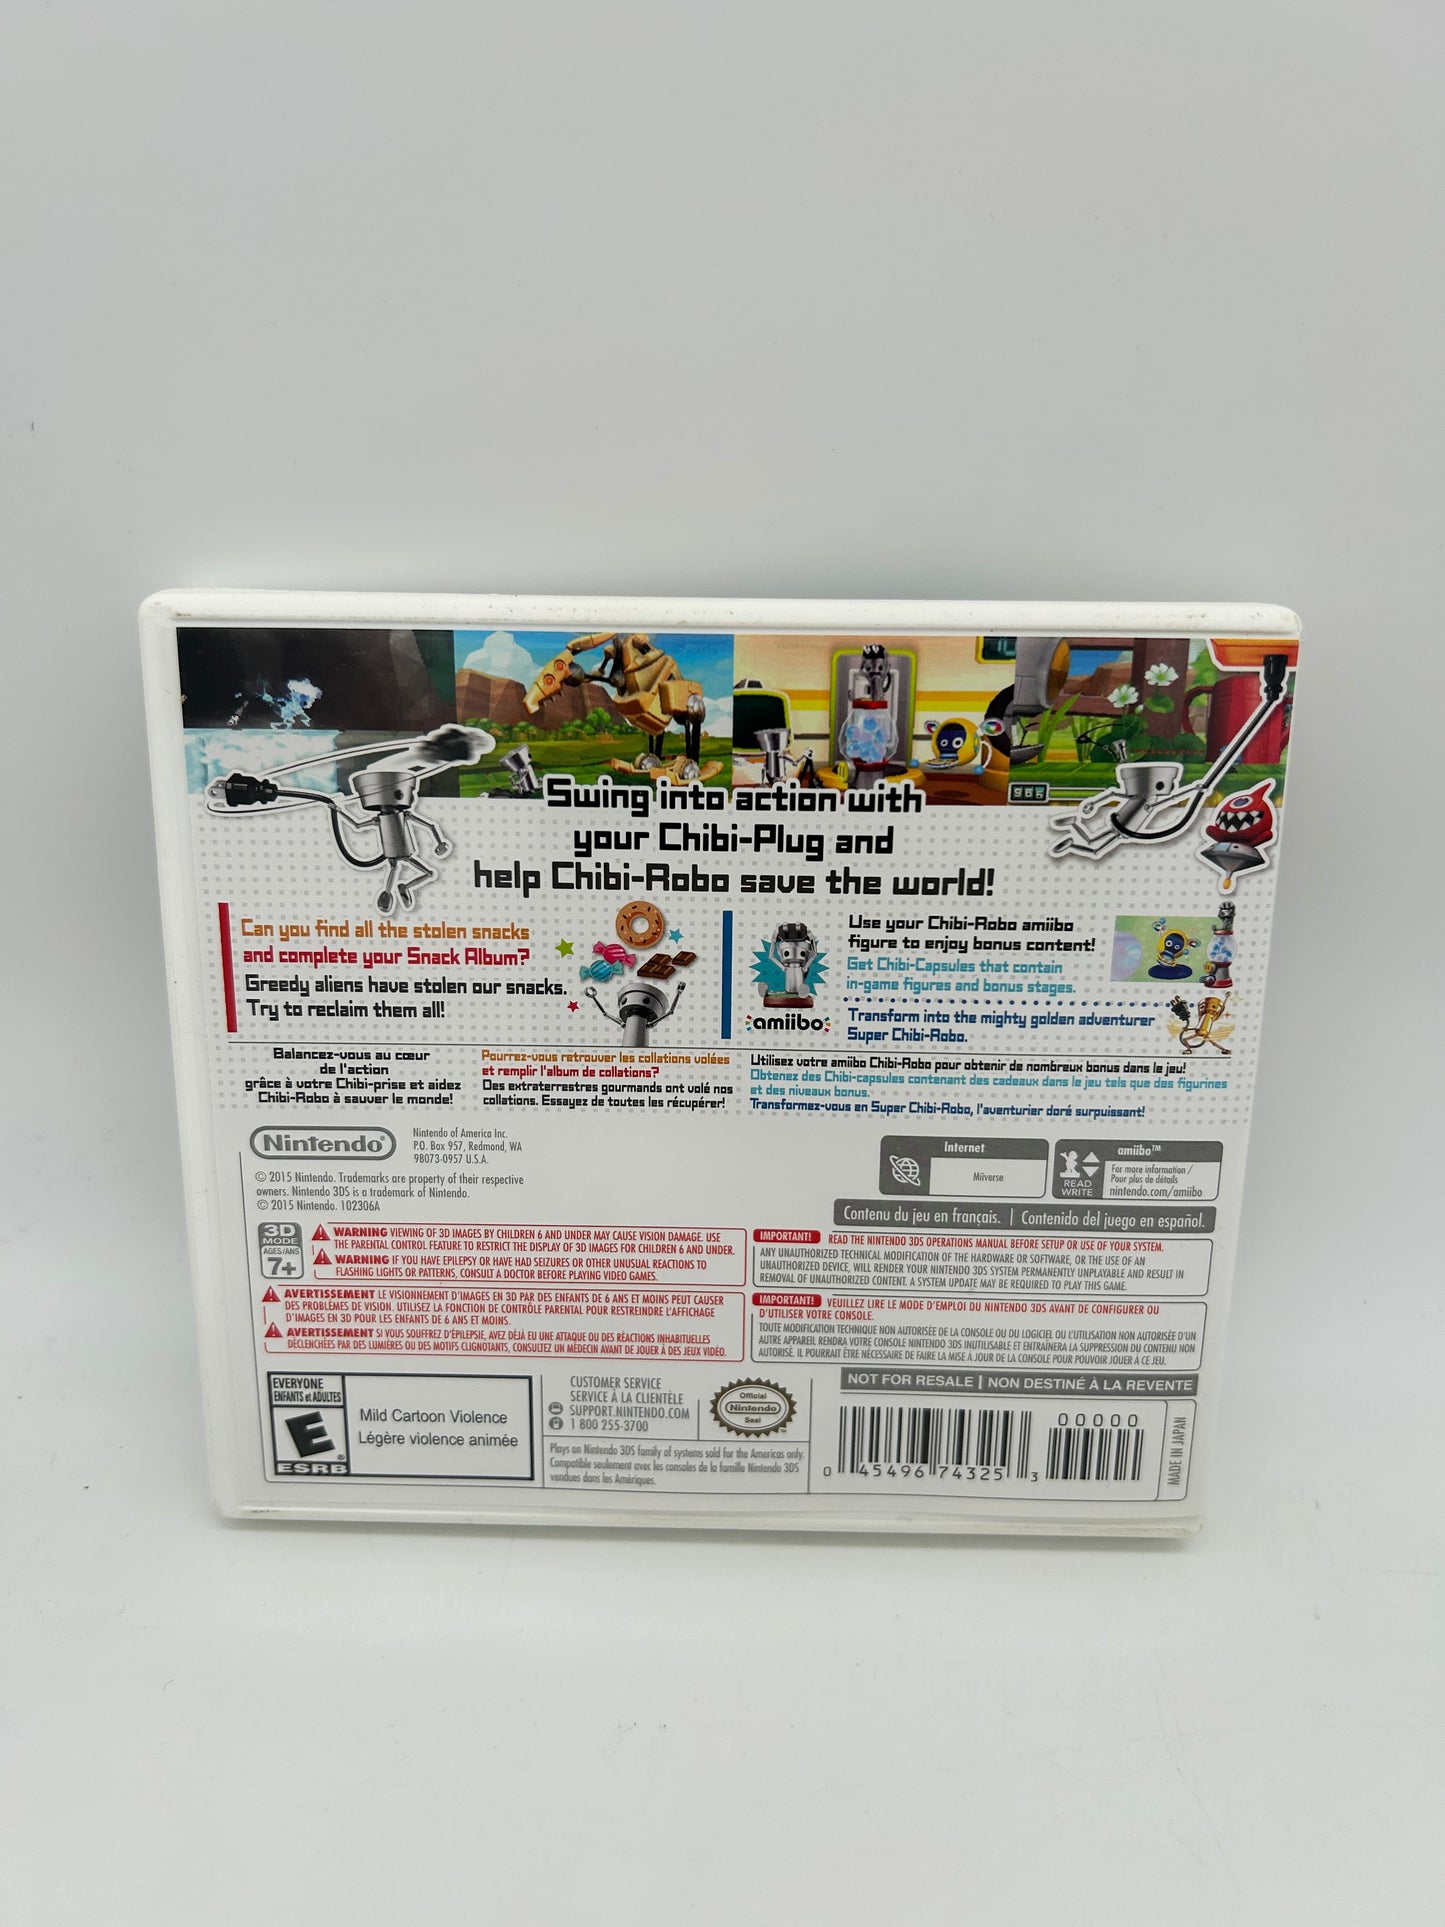 NiNTENDO 3DS | CHiBi-ROBO ZiP LASH